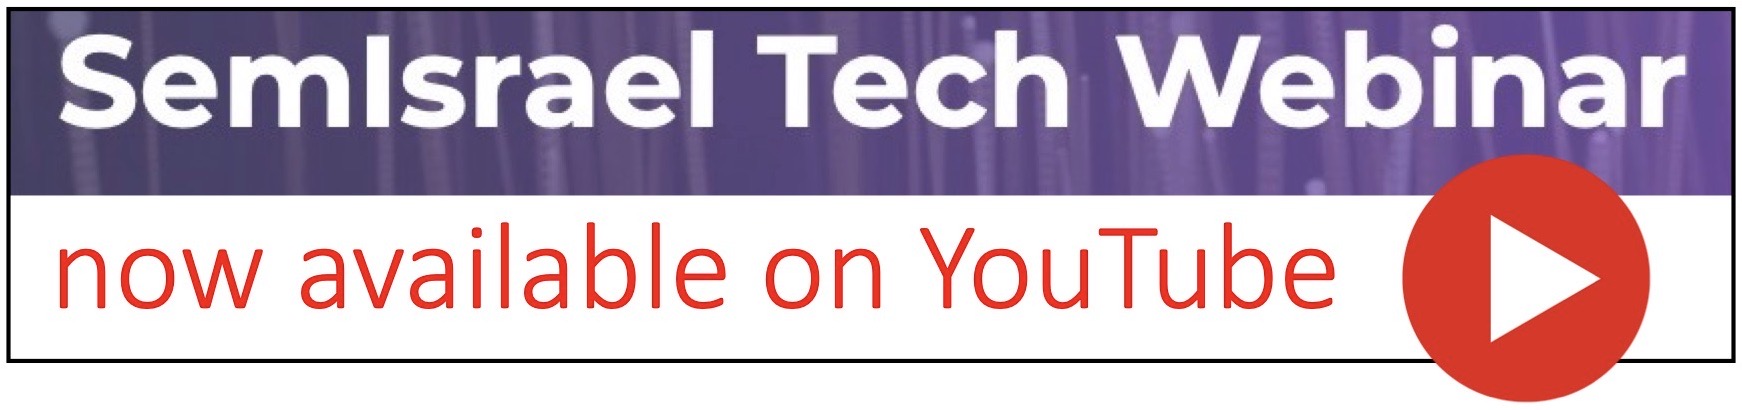 SemIsrael Tech Webinar - Imperas on YouTube